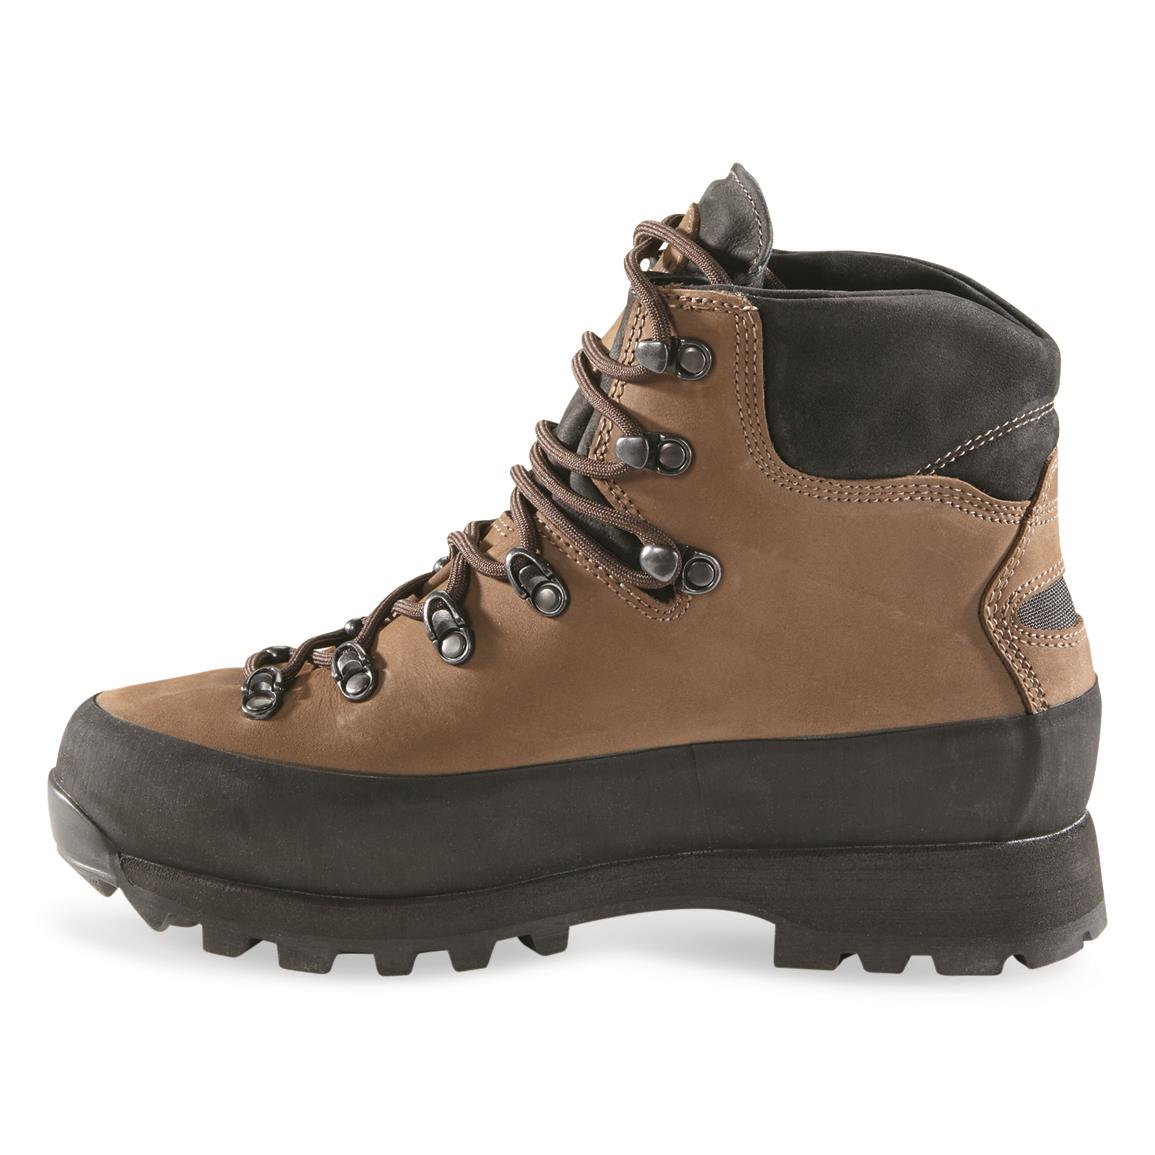 Merrell Women's Moab 3 Waterproof Hiking Shoes - 724762, Hiking Boots ...